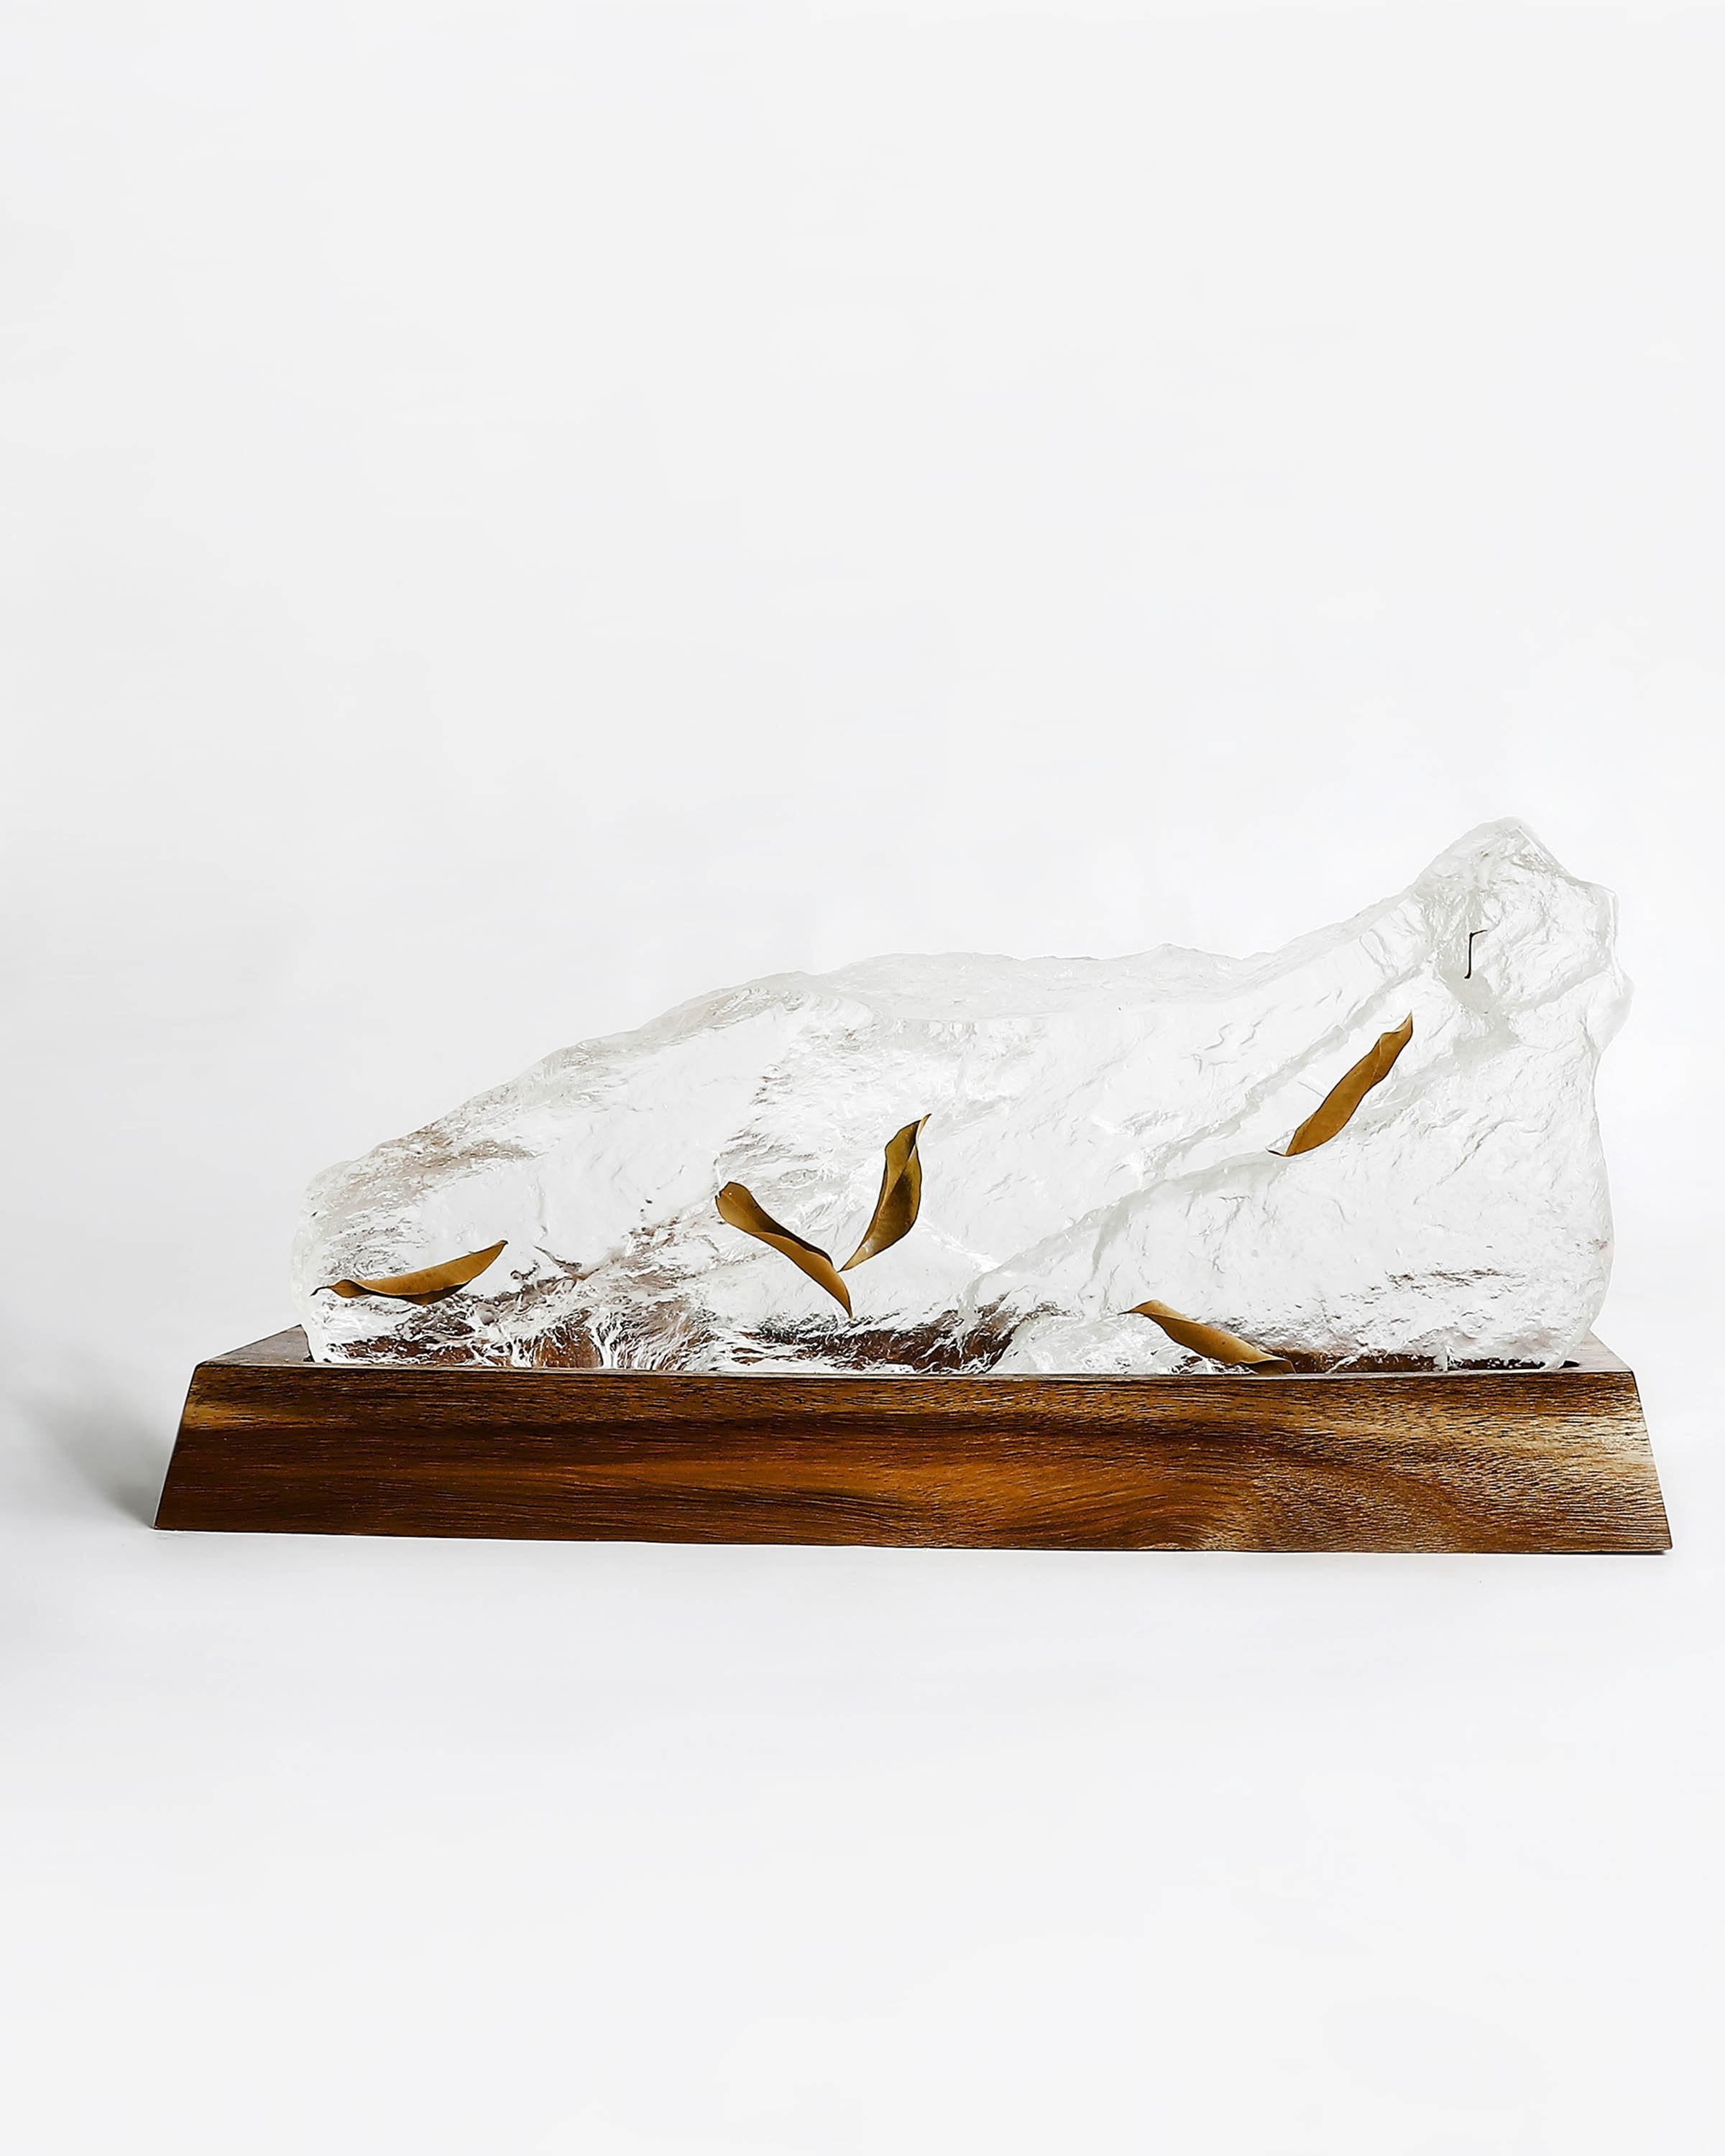 Transparent crystal sculpture